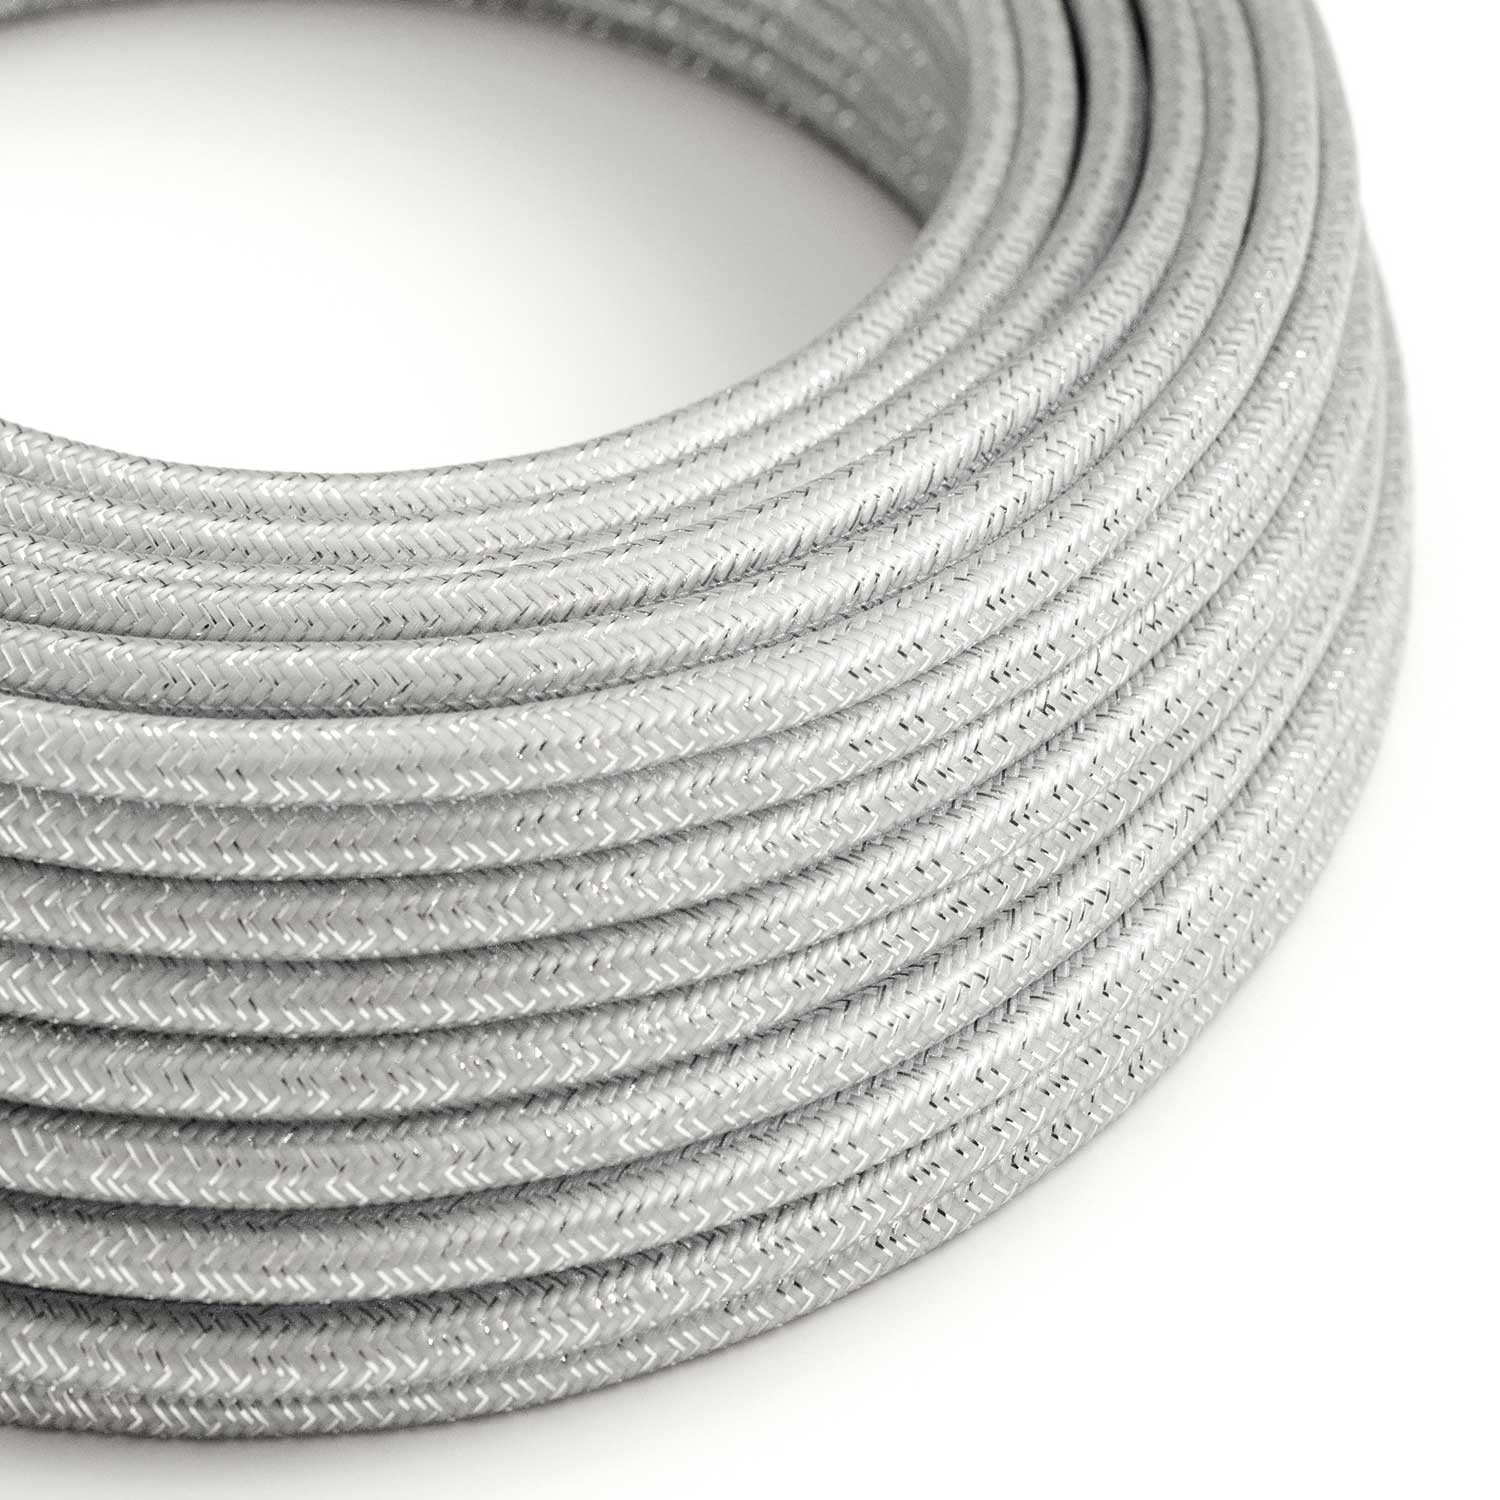 Okrogel lesketajoč tekstilen električen kabel RL02 - srebrn